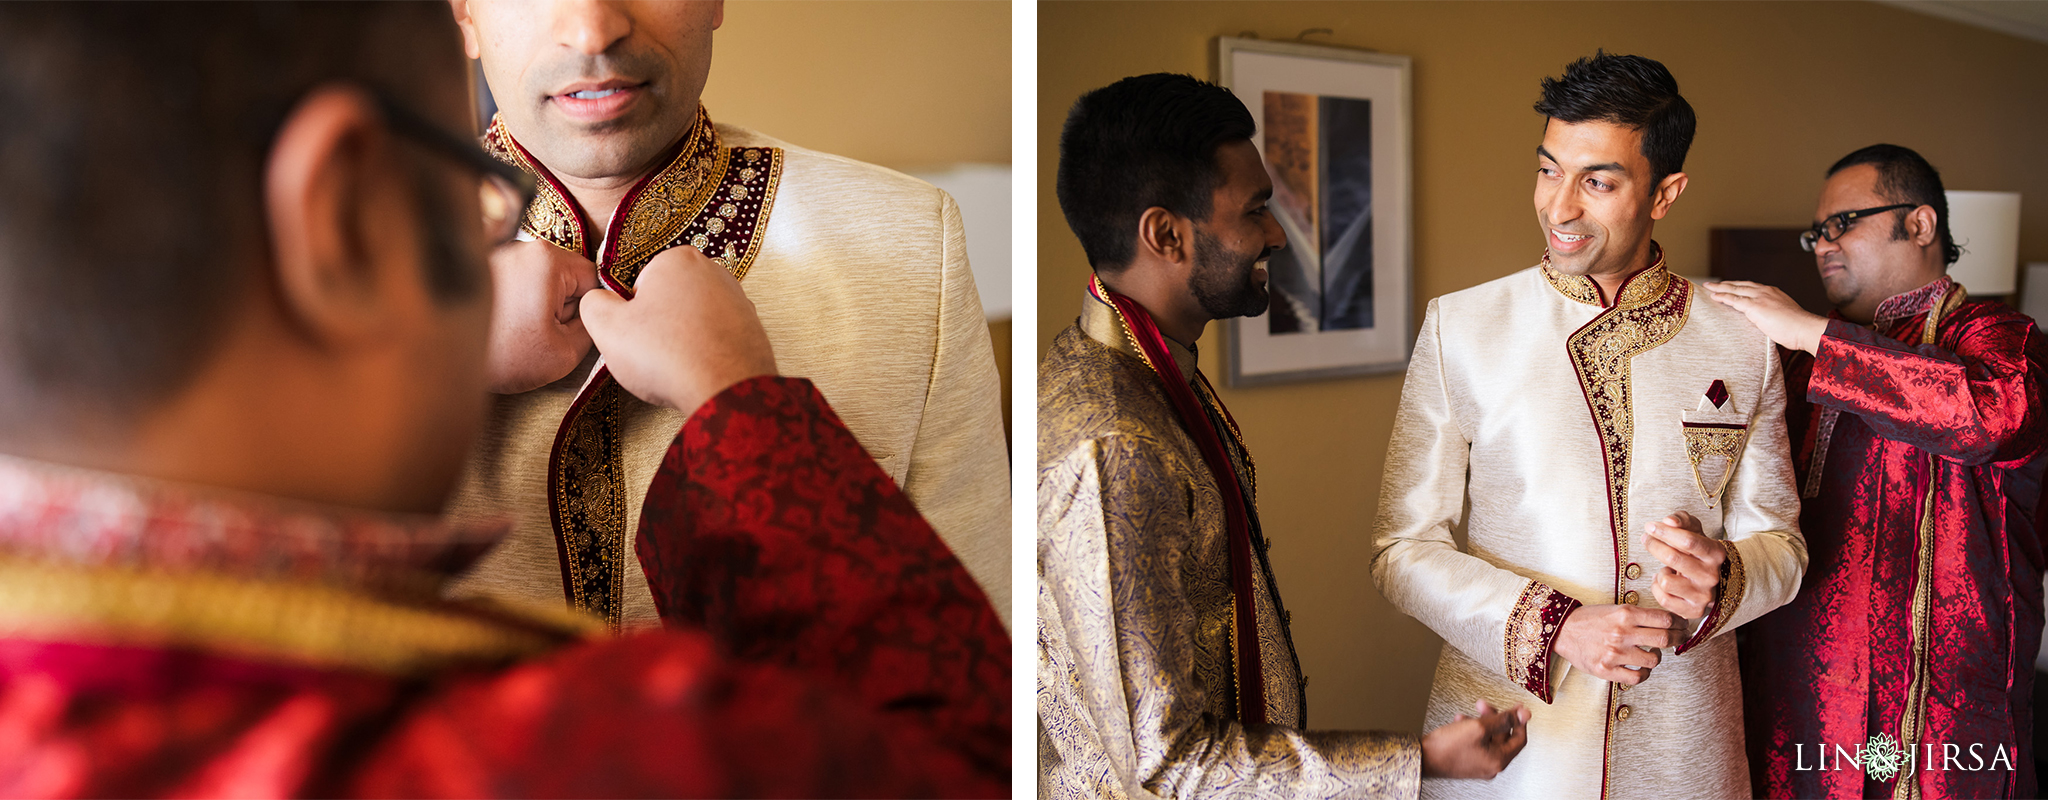 03 Newport Beach Marriott Indian Wedding Photography